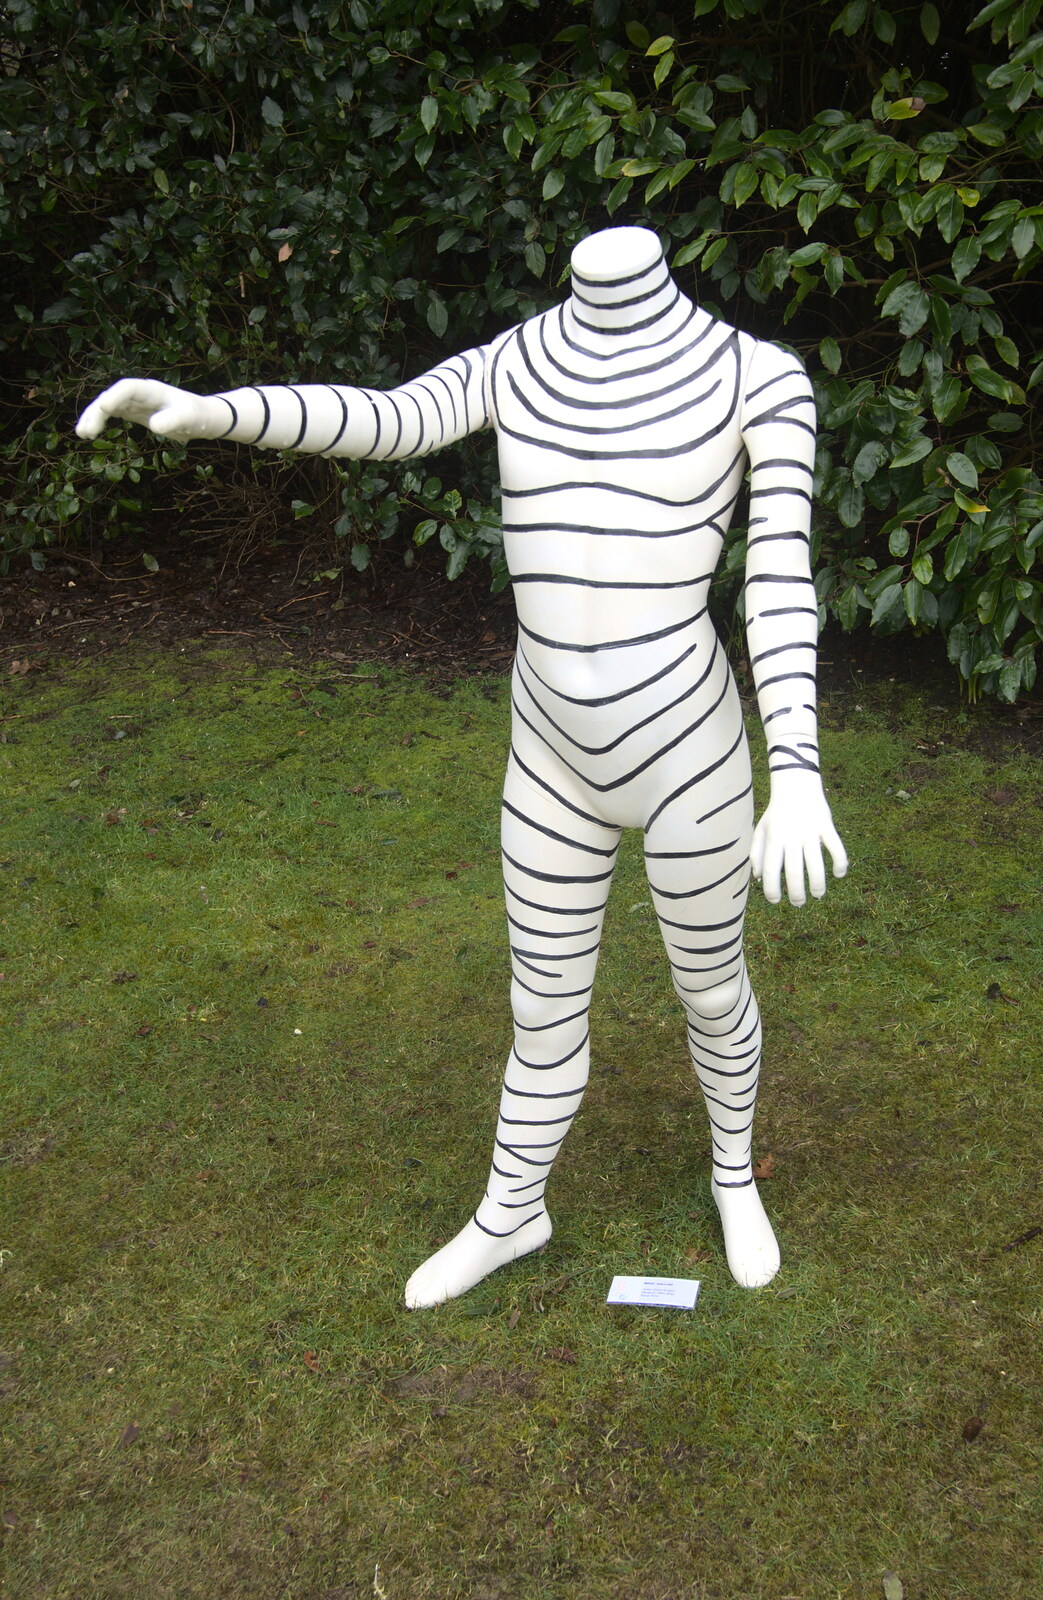 A zebra mannequin from A Trip to Highcliffe Castle, Highcliffe, Dorset - 18th March 2013